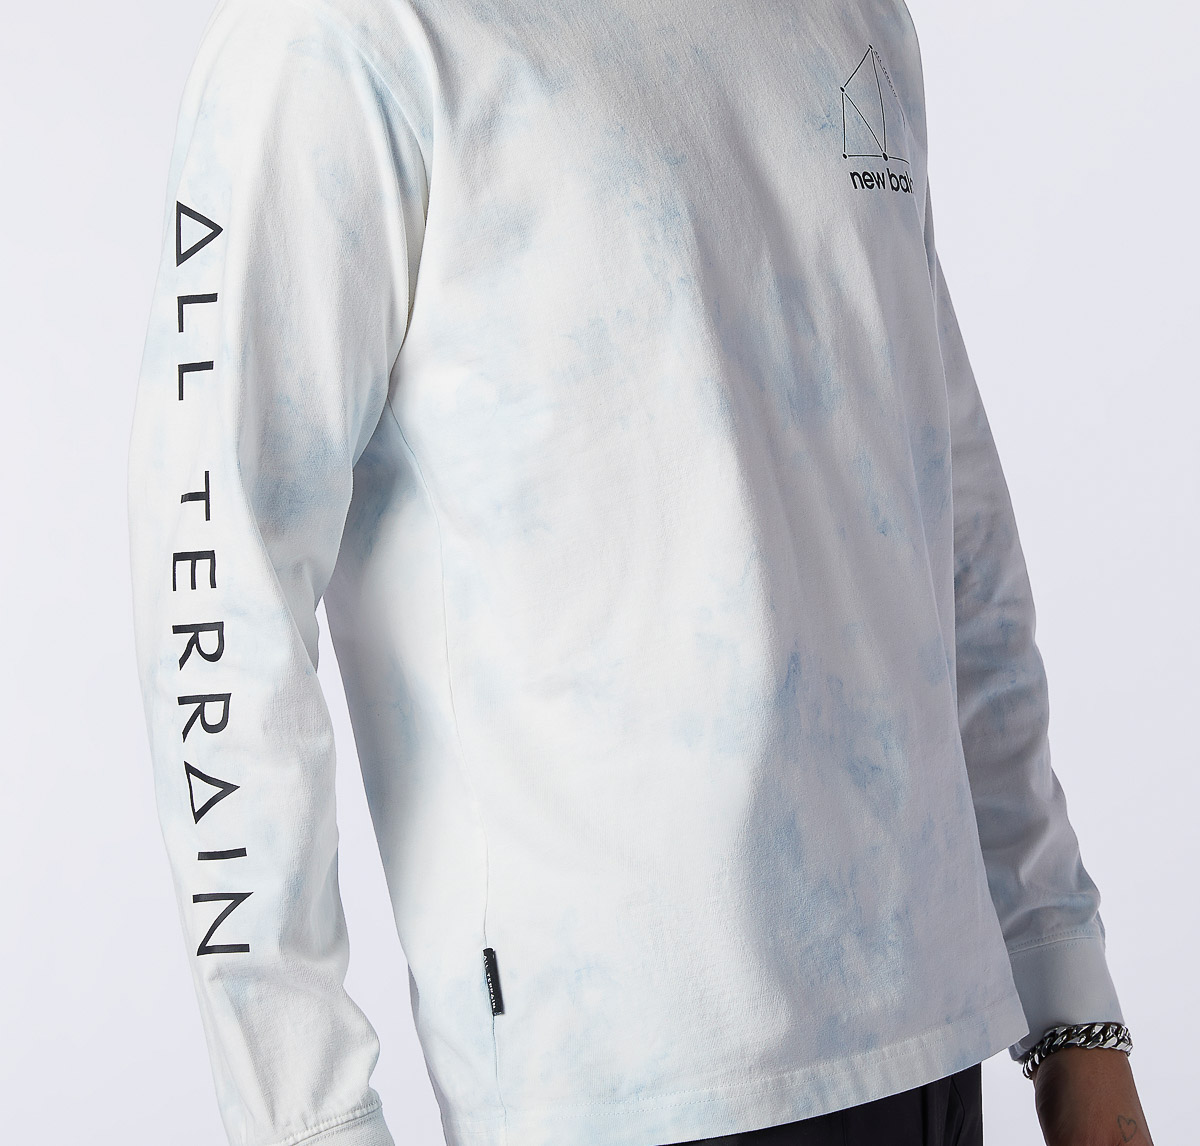 New Balance All Terrain Longsleeve Tie Dye Shirt - White Ice detail